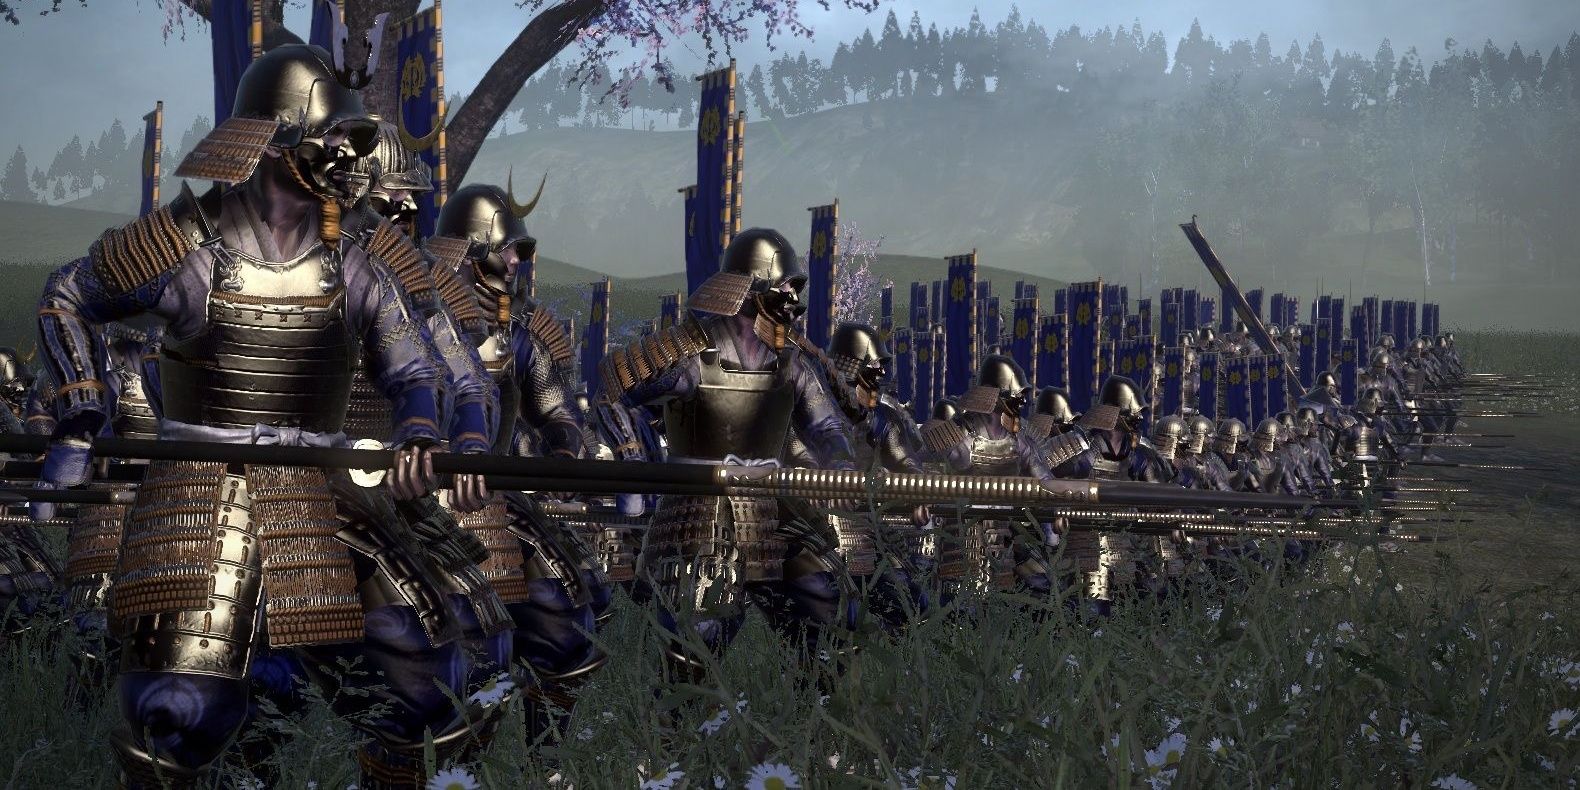 A line of soldiers in Total War: Shogun 2 battle